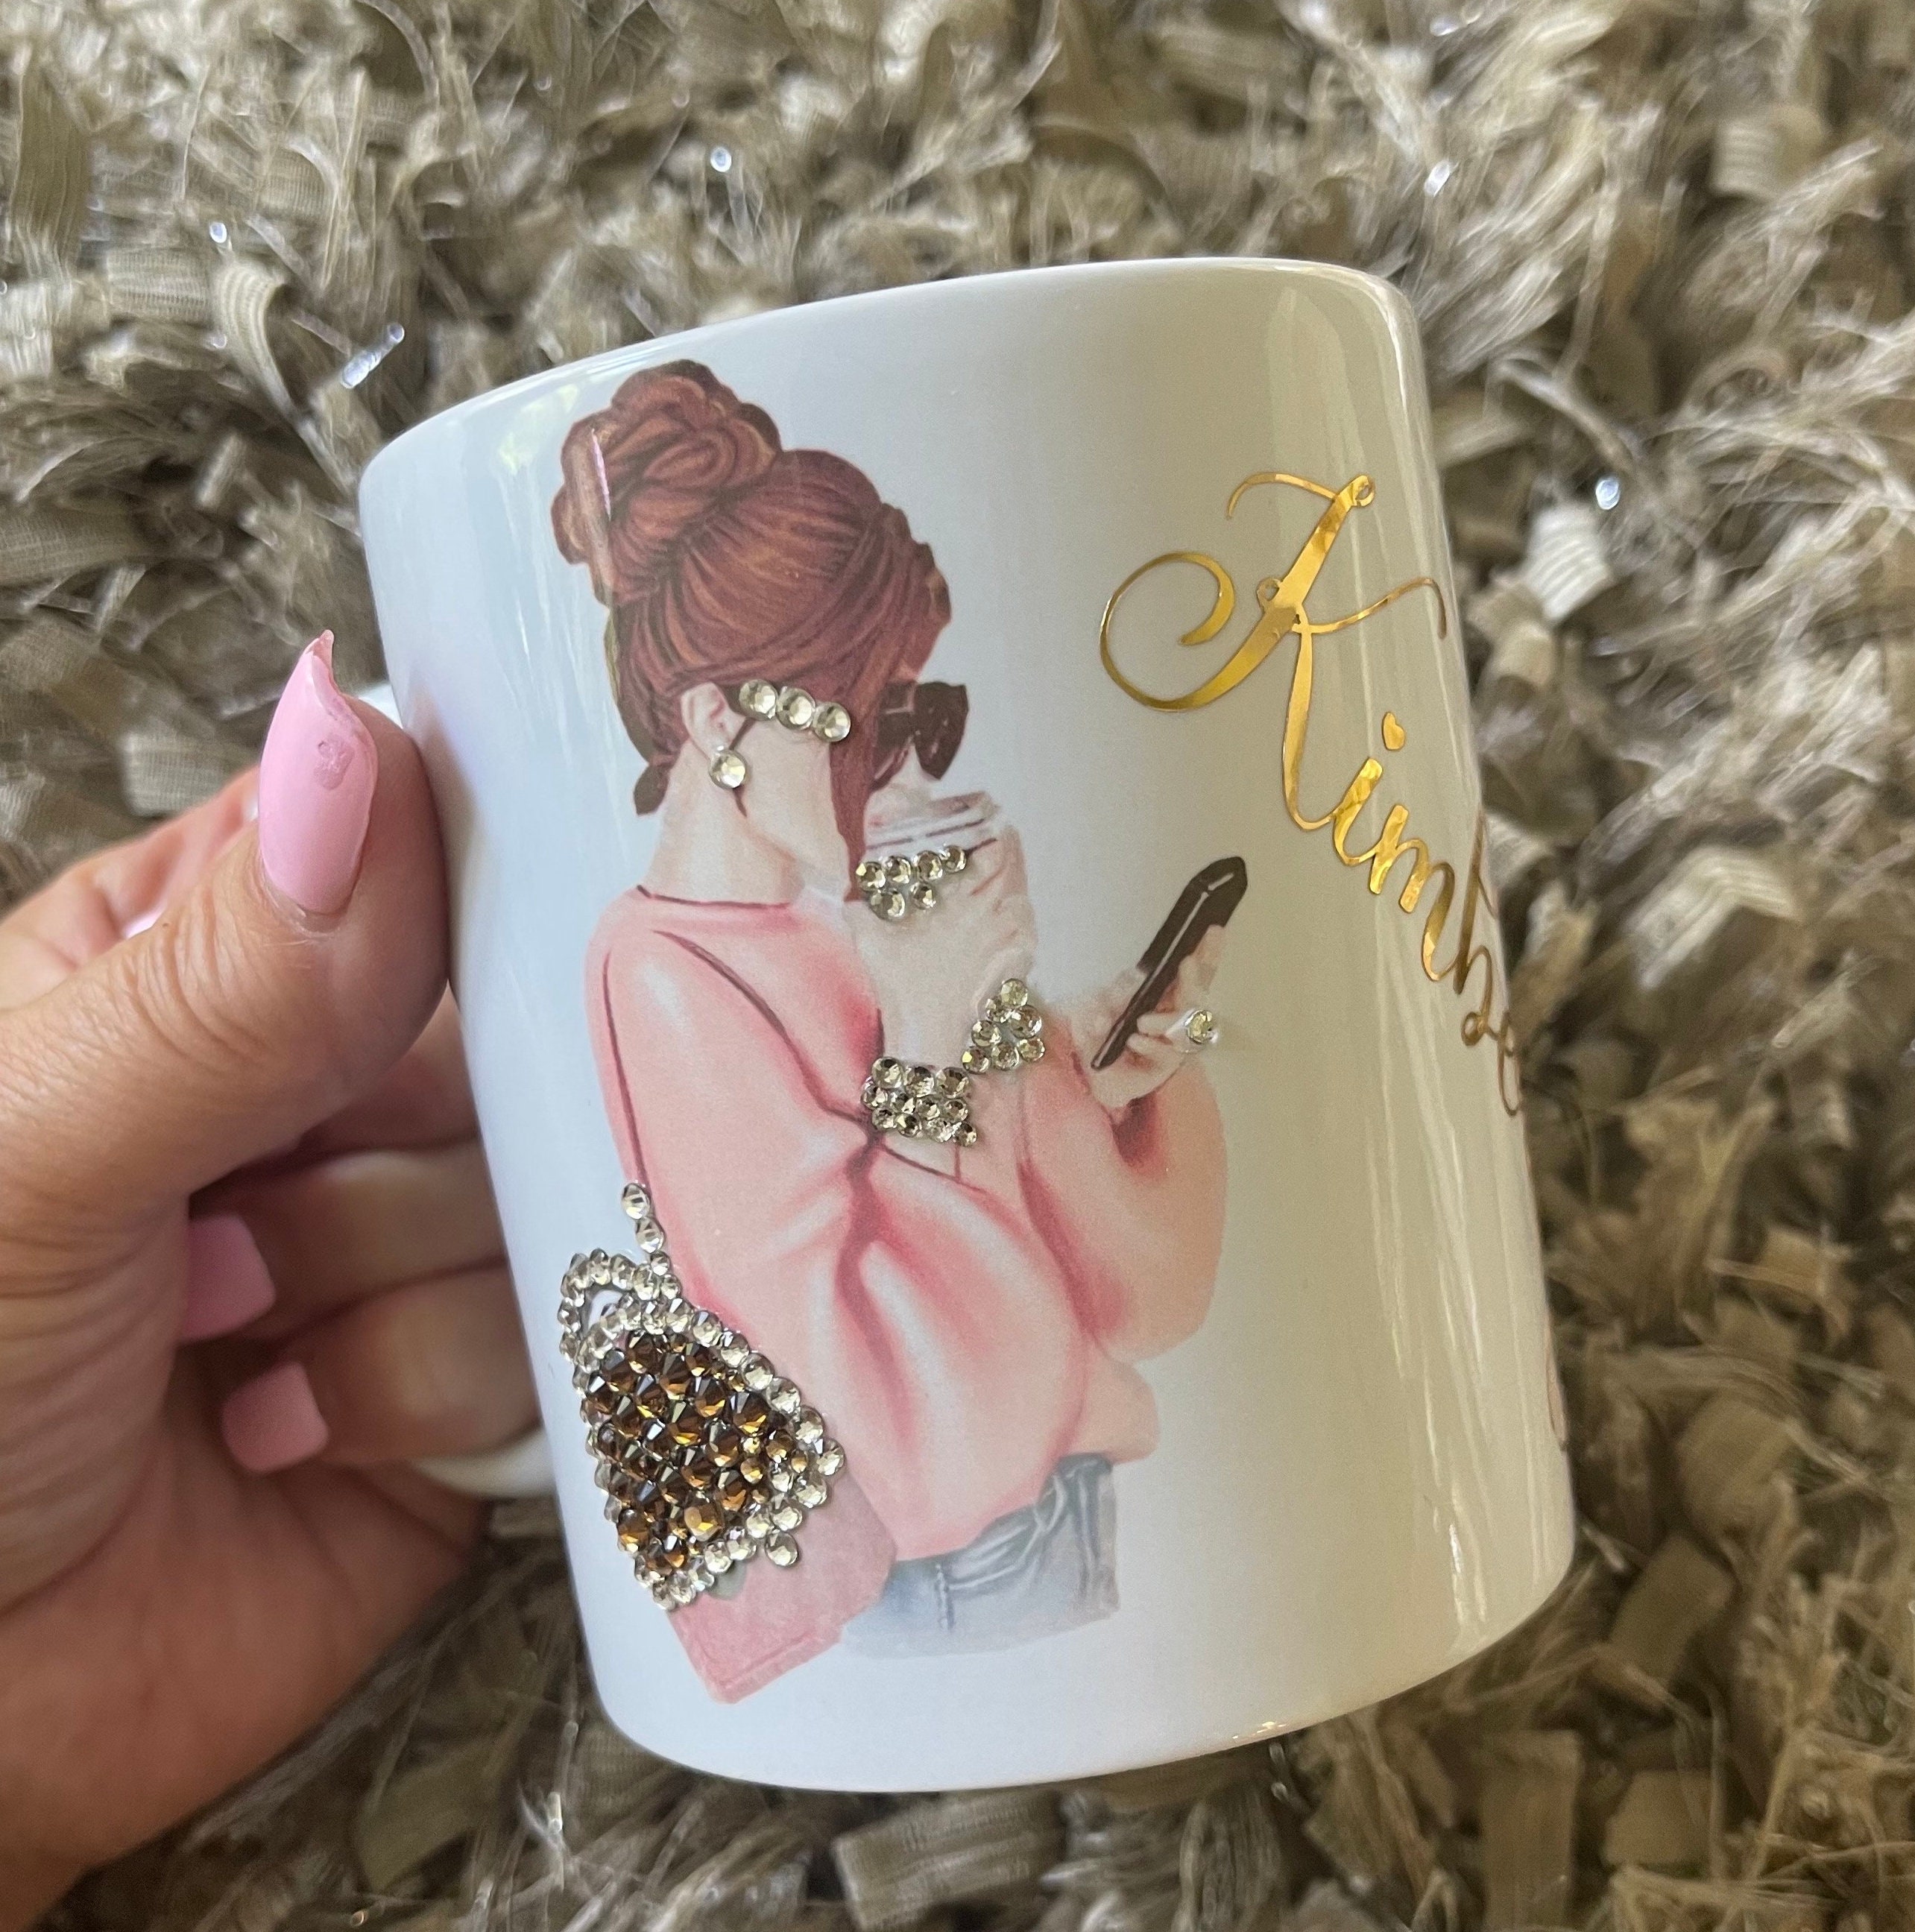 Stylish Girl Mug Glam Mug Fashion Design Mug Coffee Tea 